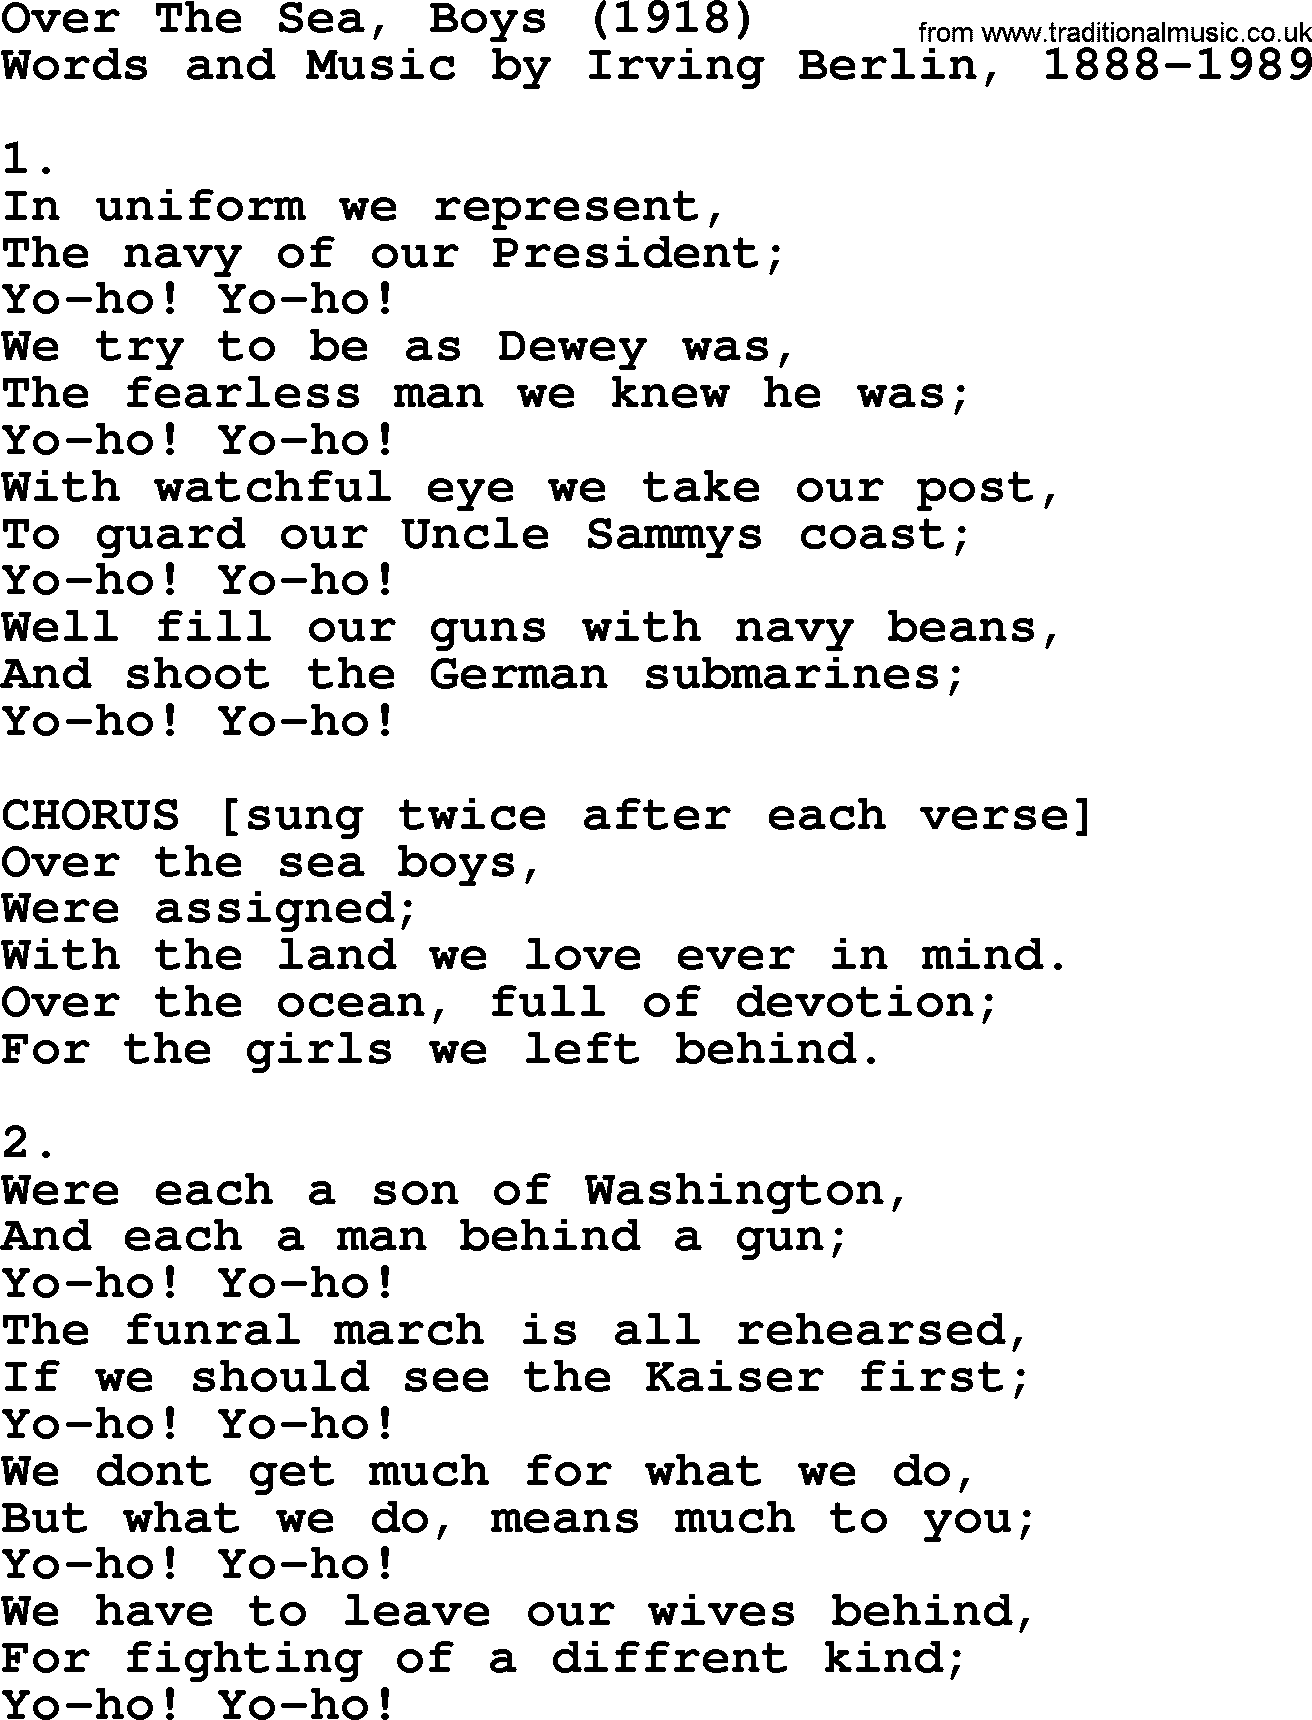 World War(WW1) One Song: Over The Sea, Boys 1918, lyrics and PDF